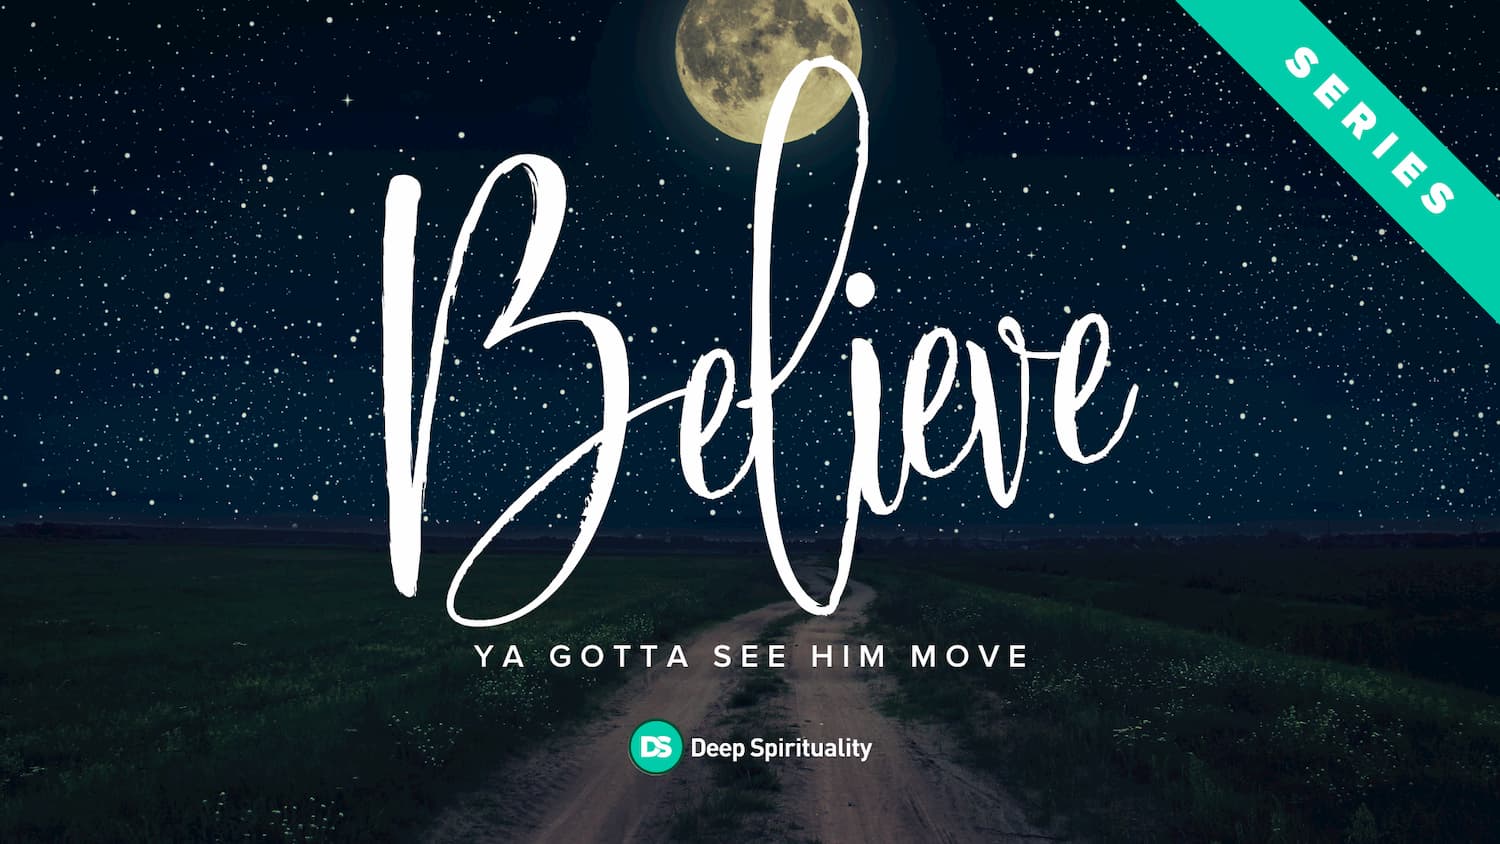 Believe, Part 2: Ya Gotta See Him Move 2